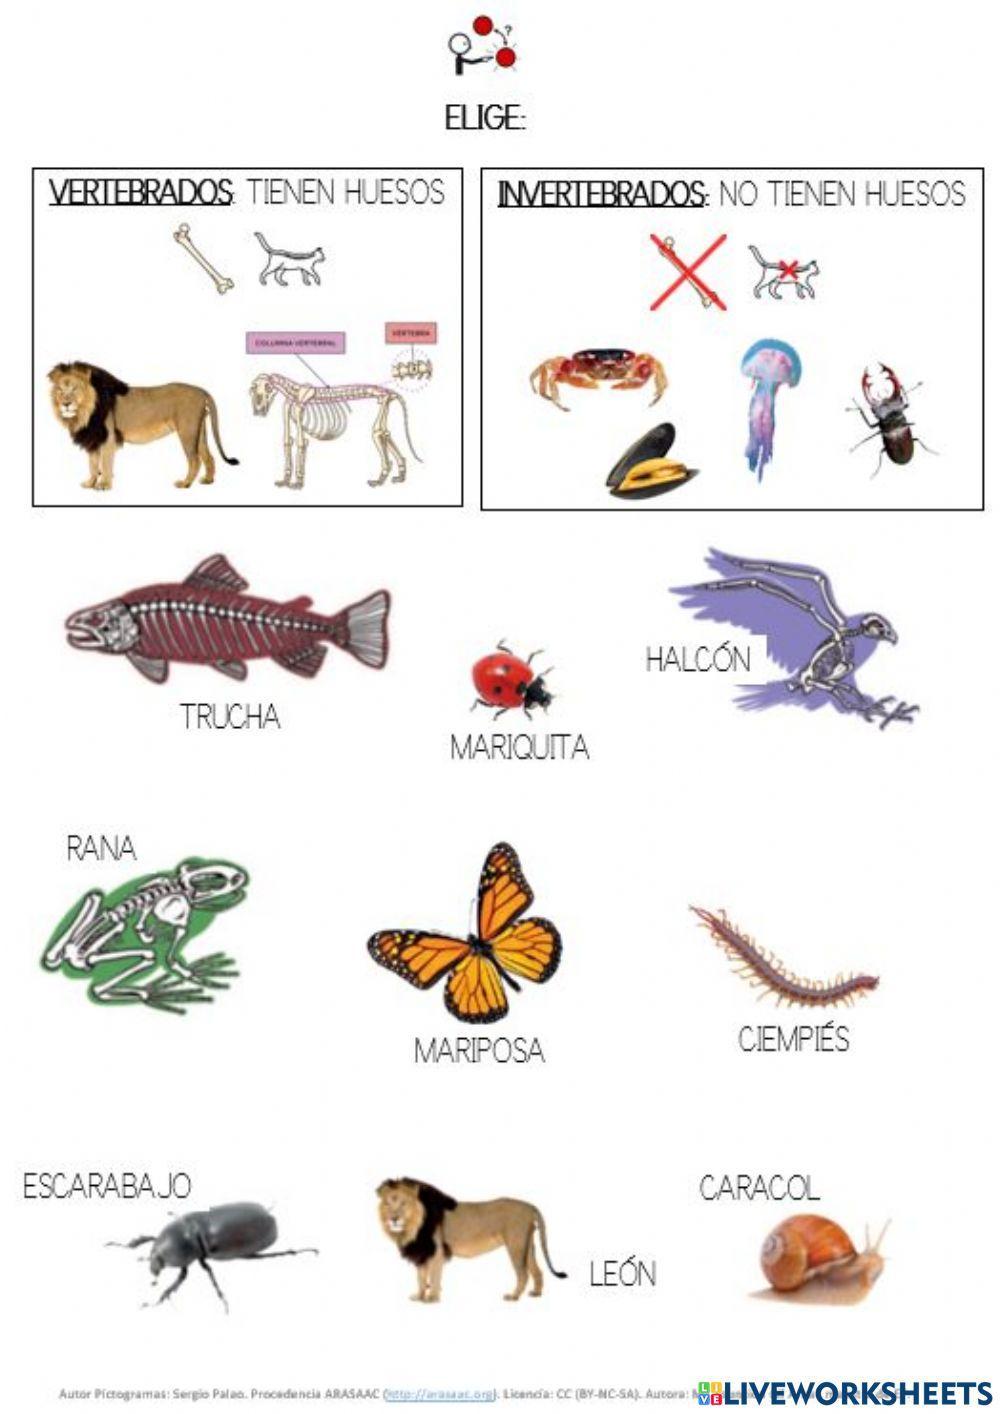 Clasifica animales vertebrados - invertebrados